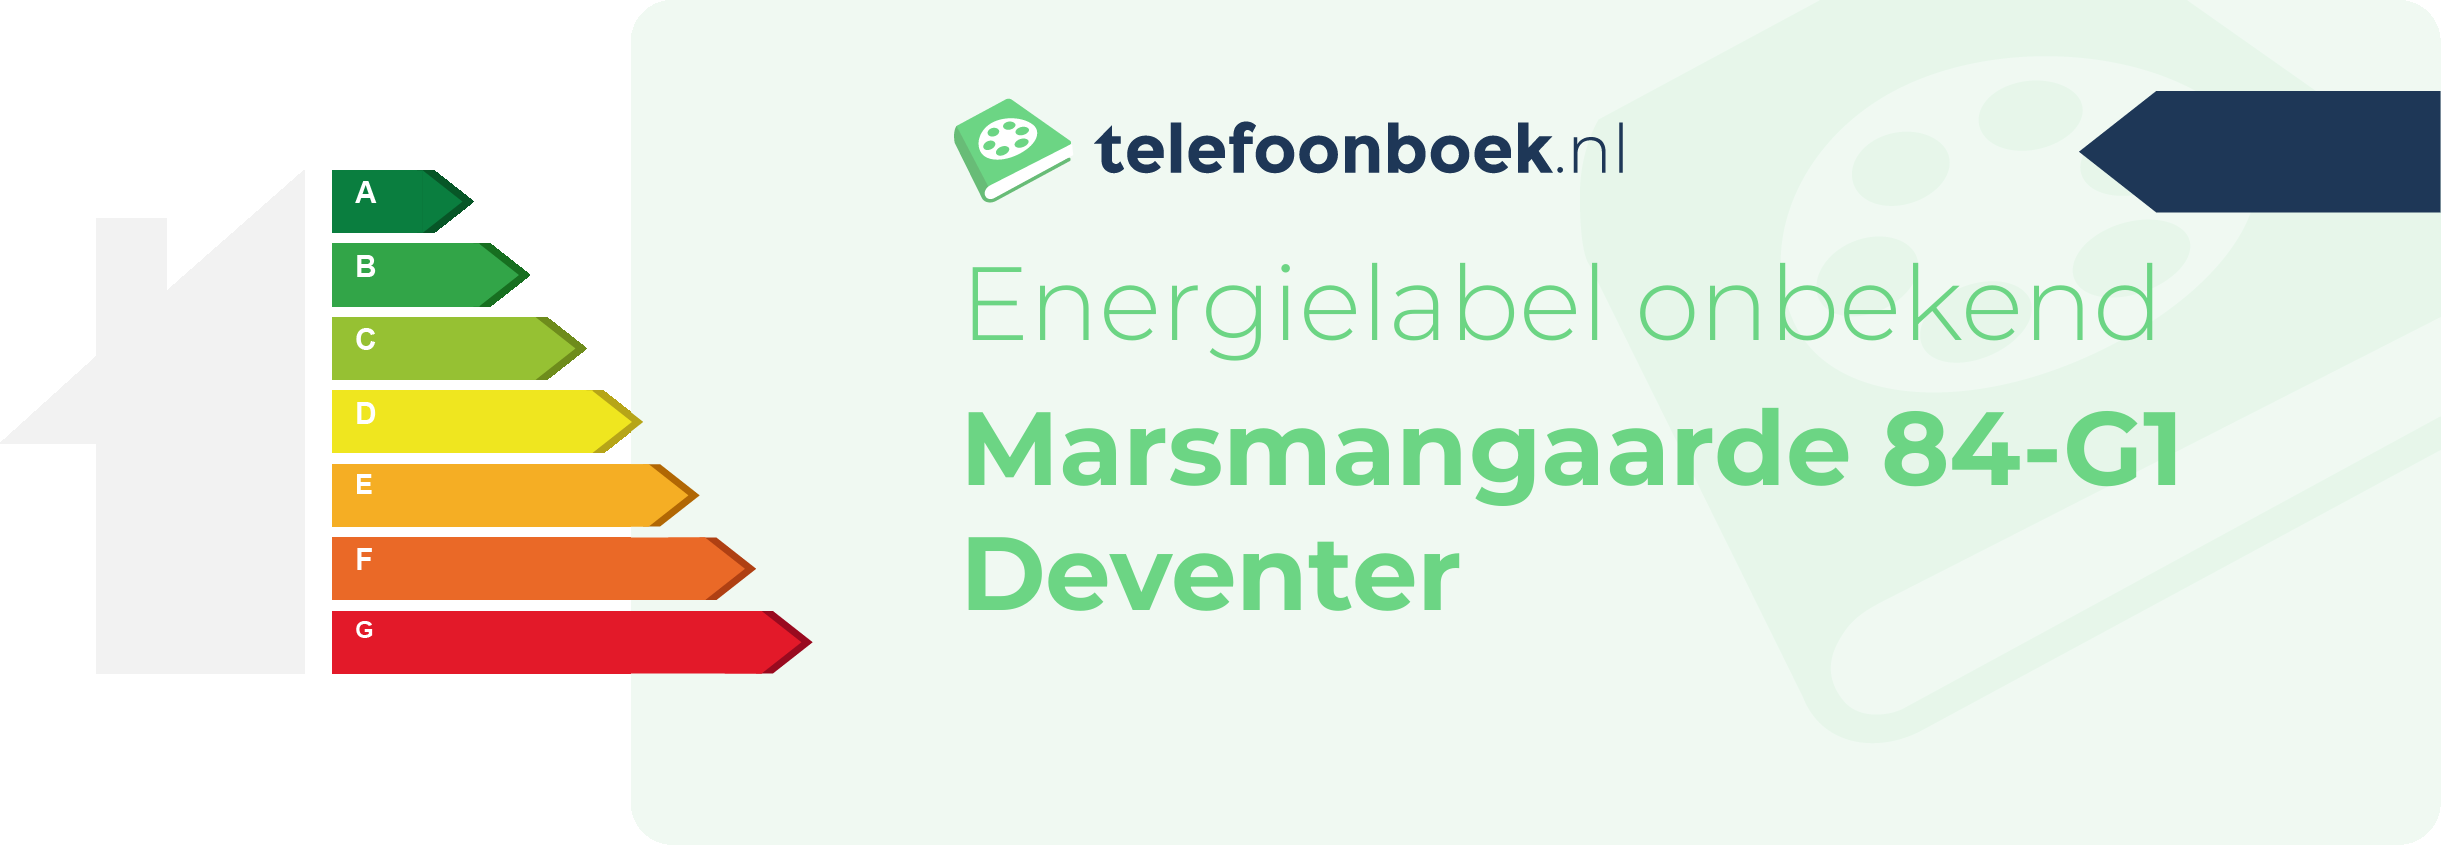 Energielabel Marsmangaarde 84-G1 Deventer